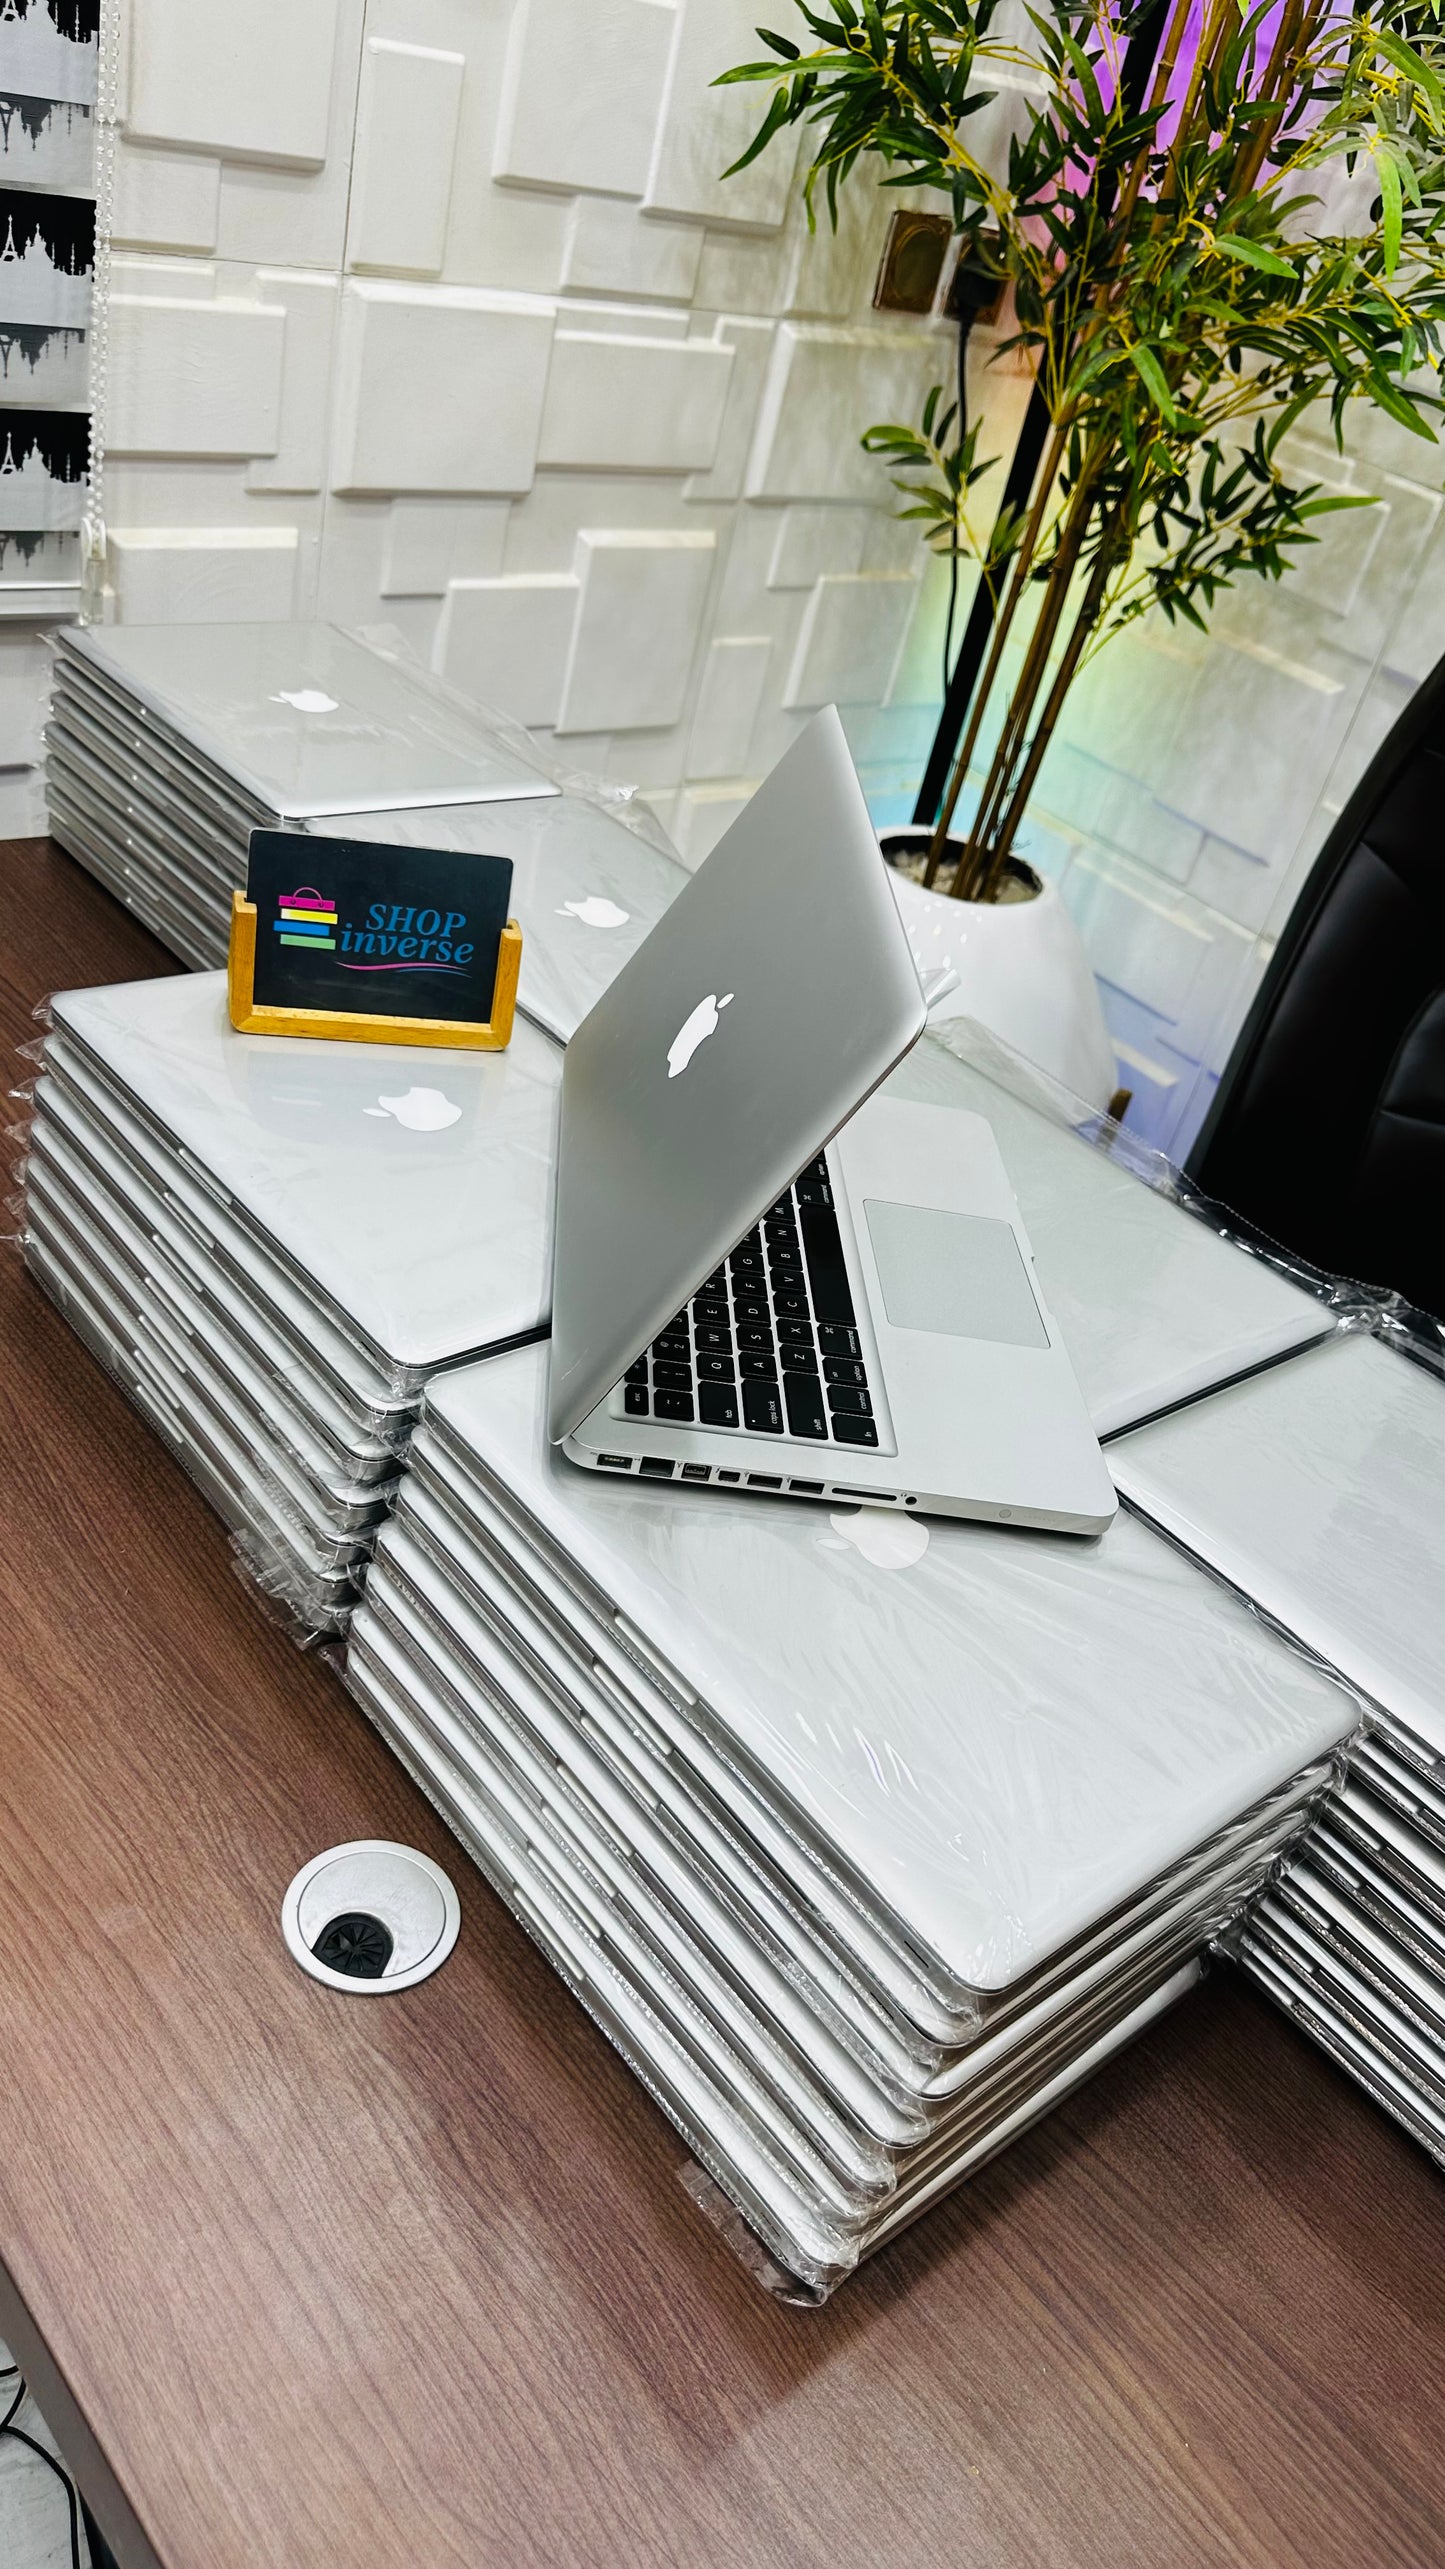 13.3 inches Apple MacBook Pro 2012  - Intel Core i5 - 500GB HDD - 4GB RAM - Keypad Light